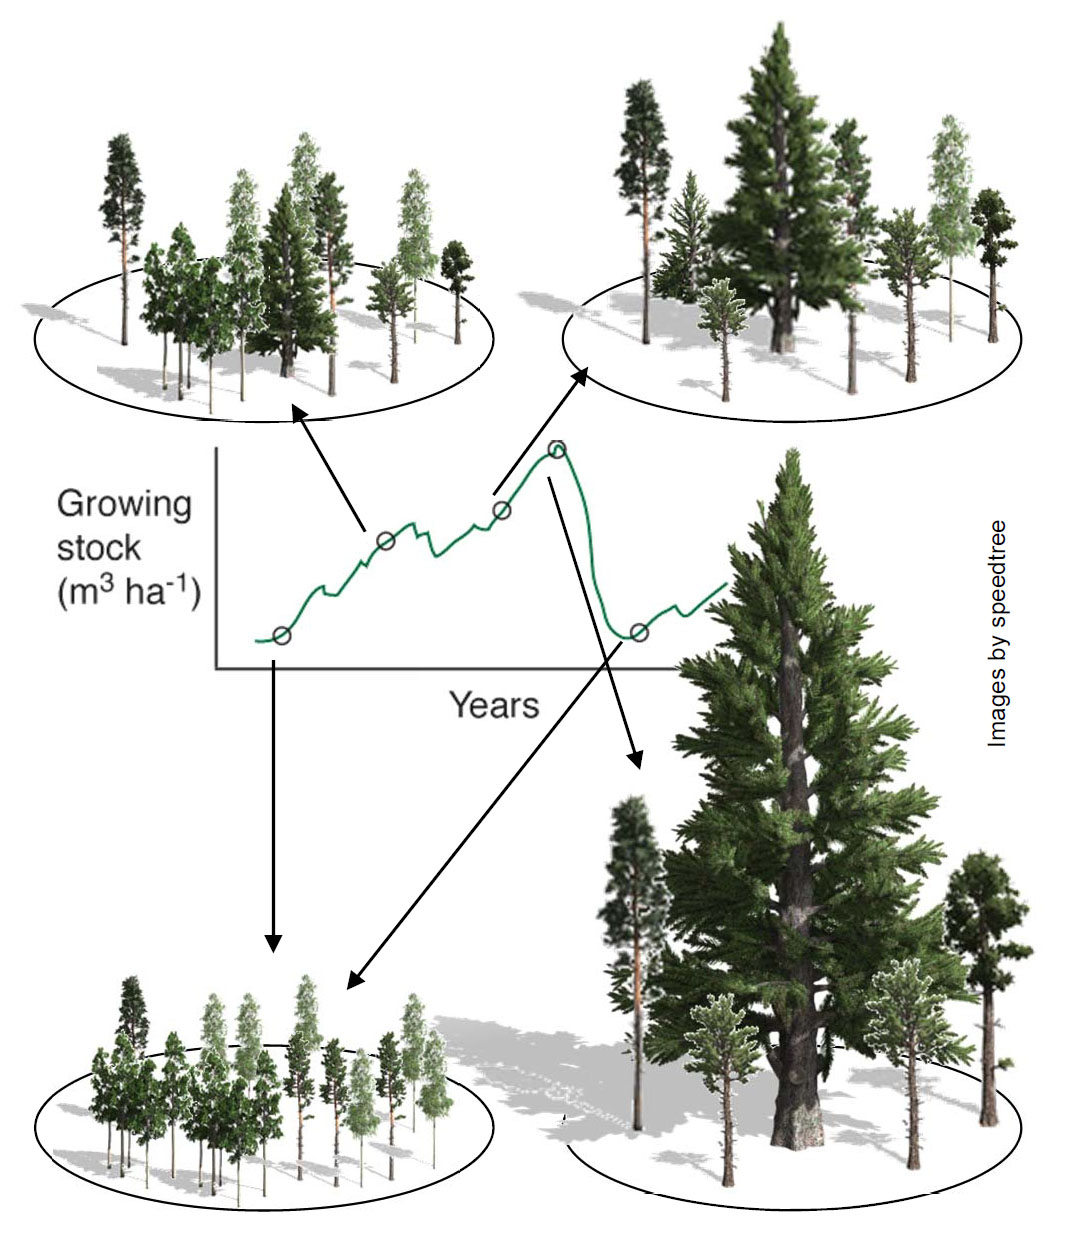 Concept of forest gap models